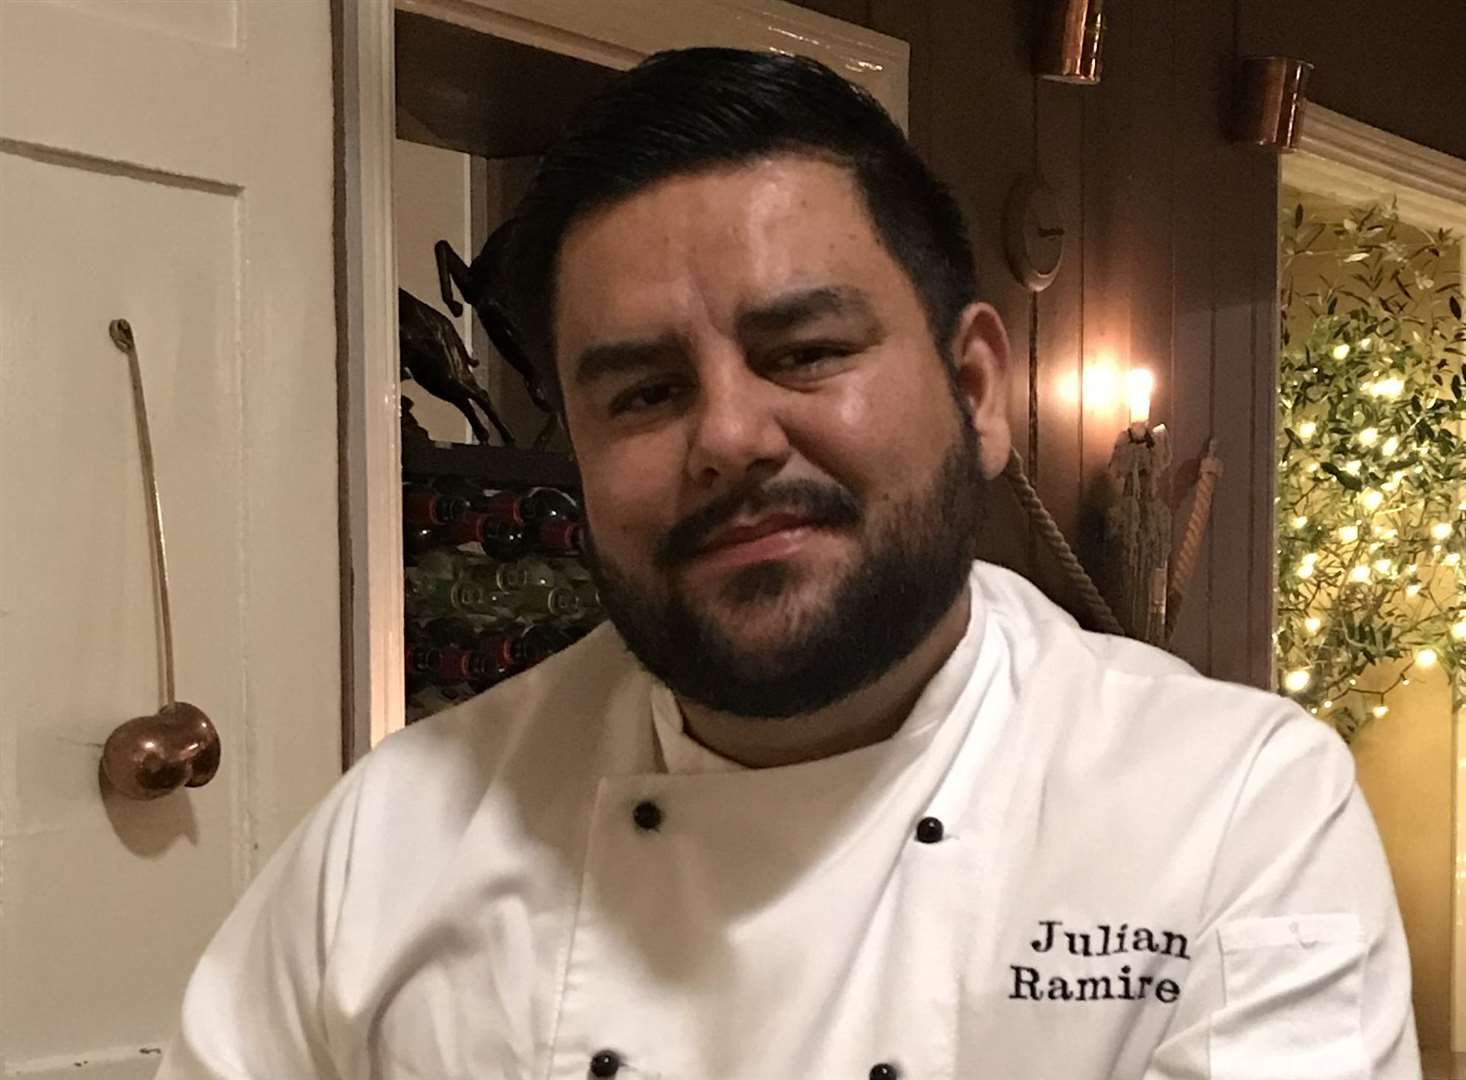 Head chef Julian Ramirez